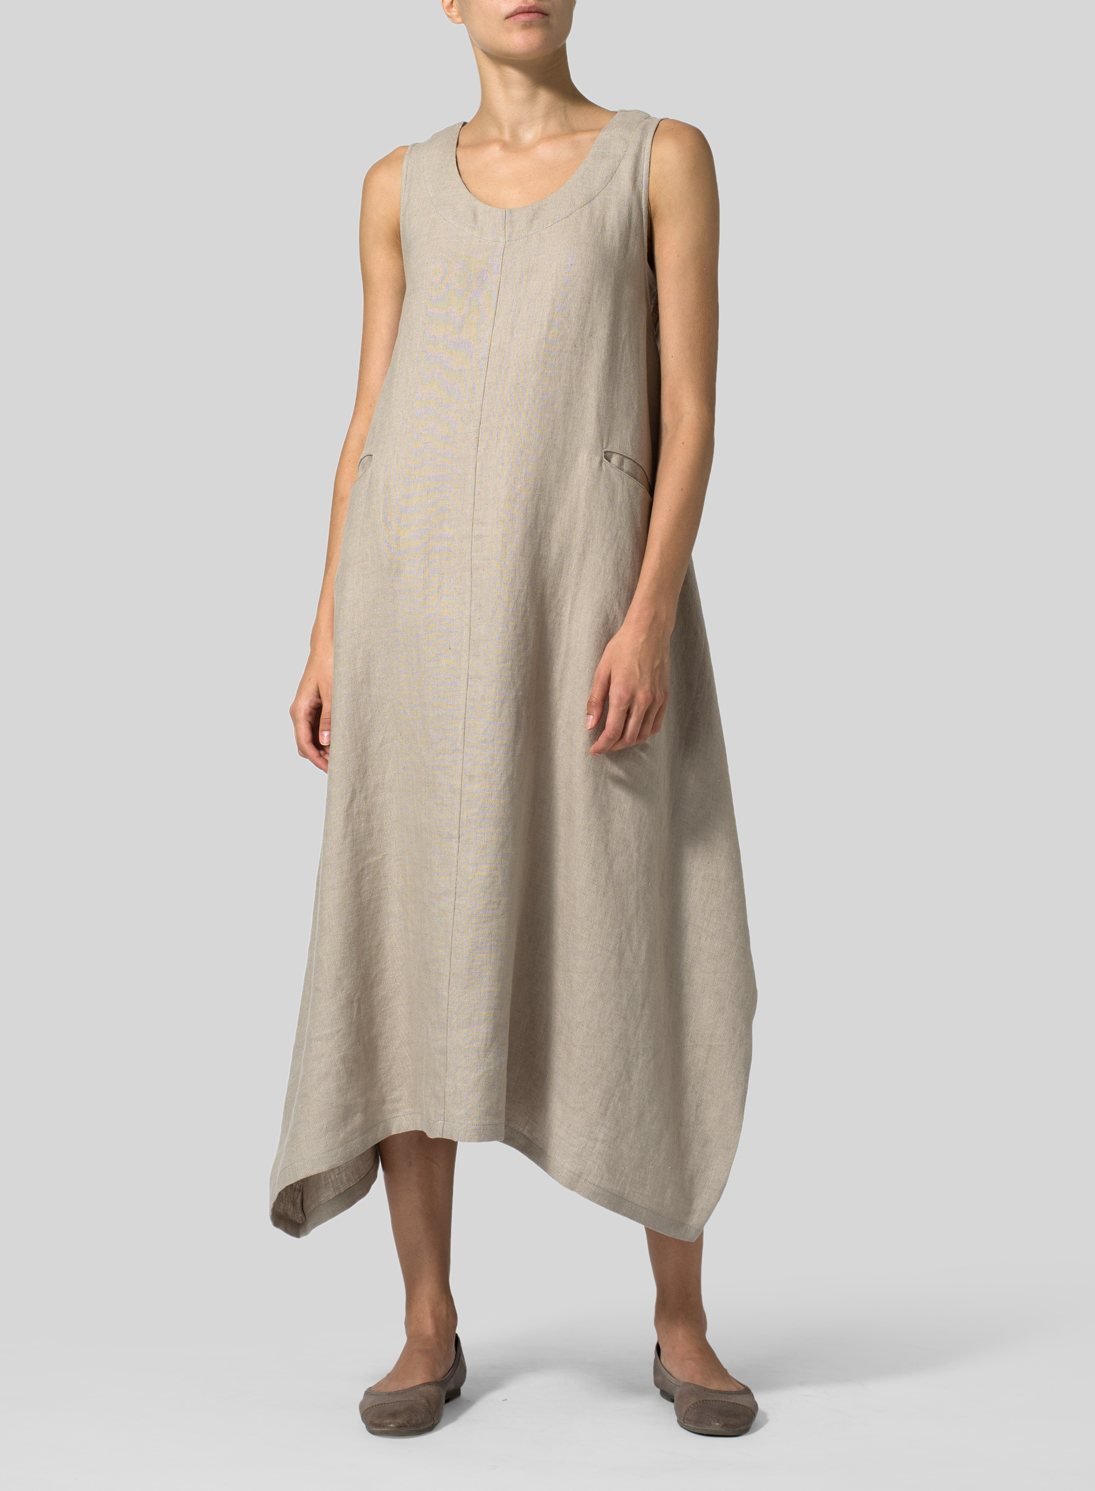 Khaki Gray Linen Sleeveless Long Dress - Plus Size